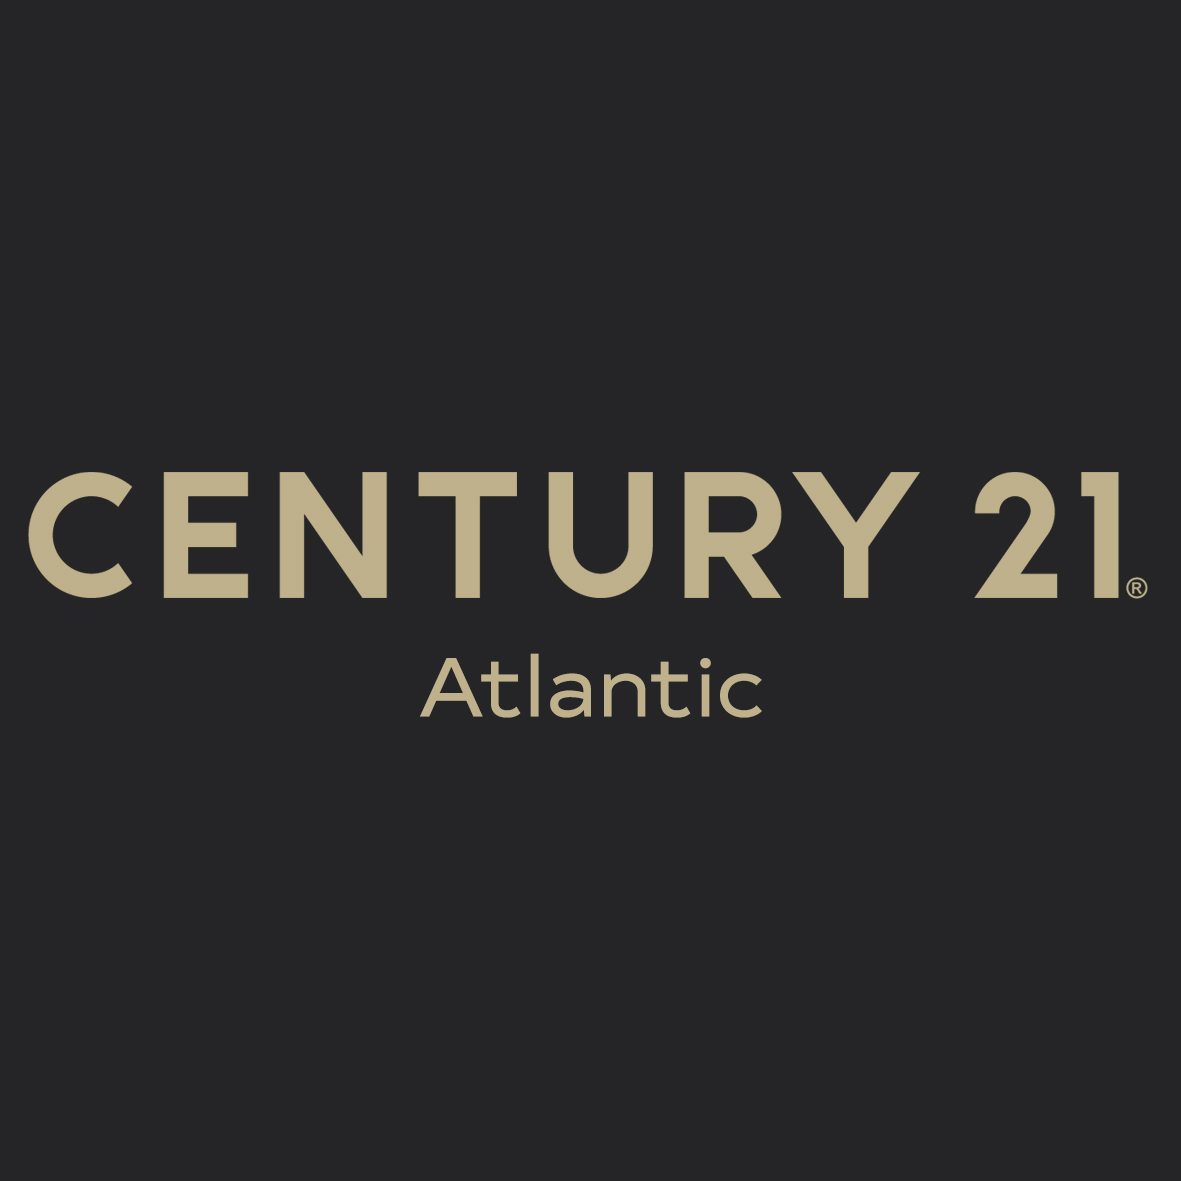 CENTURY 21 Atlantic